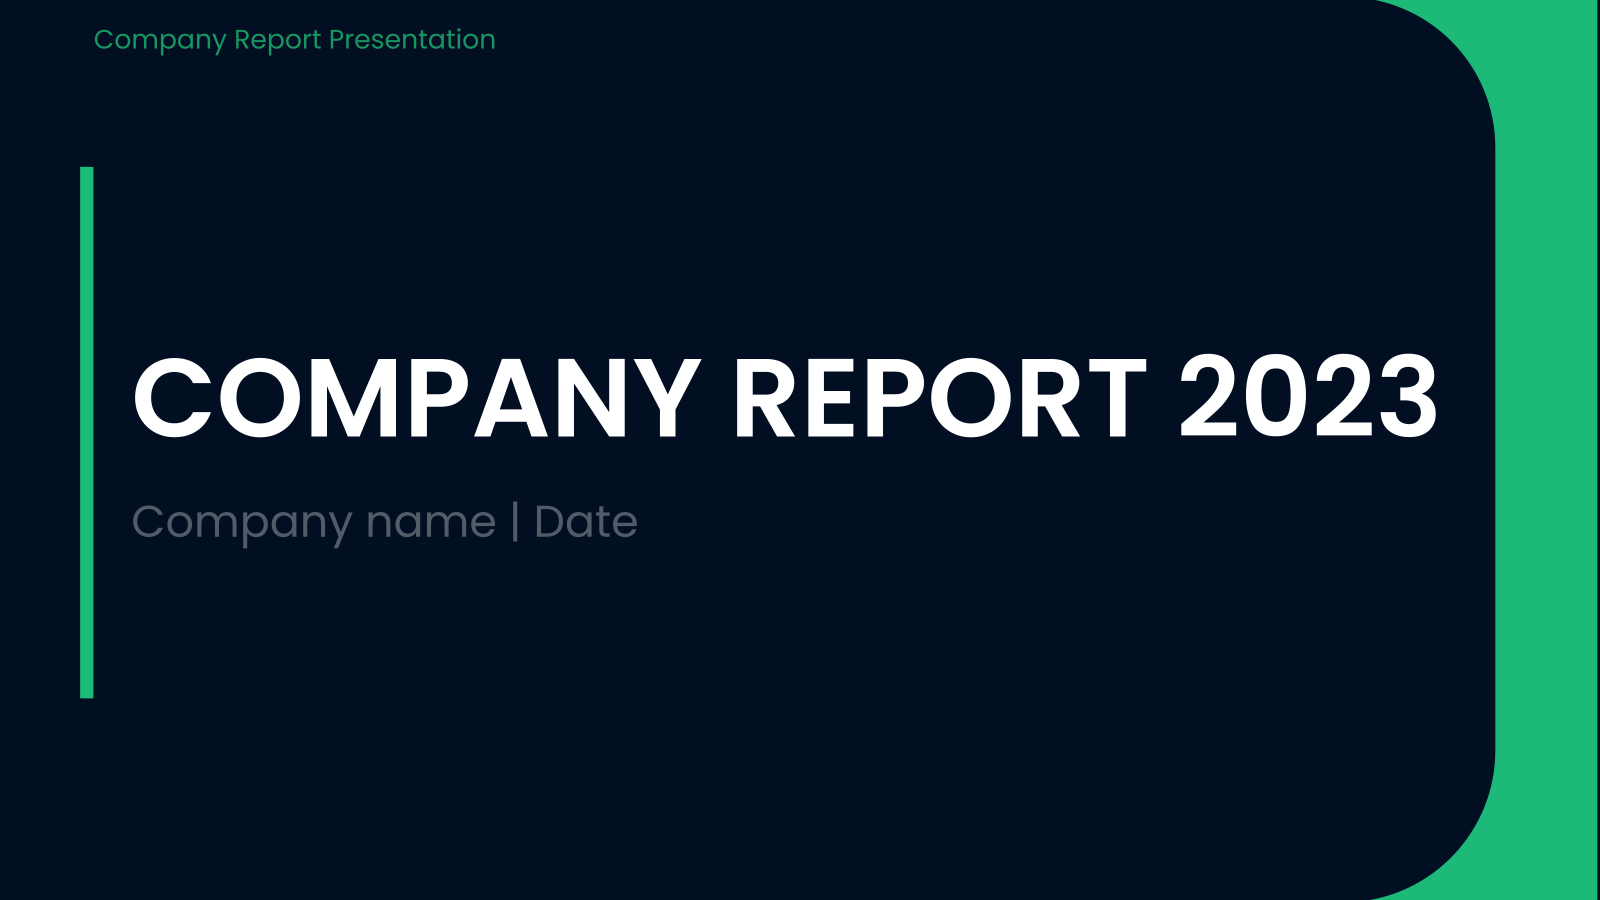 Company Report Presentation